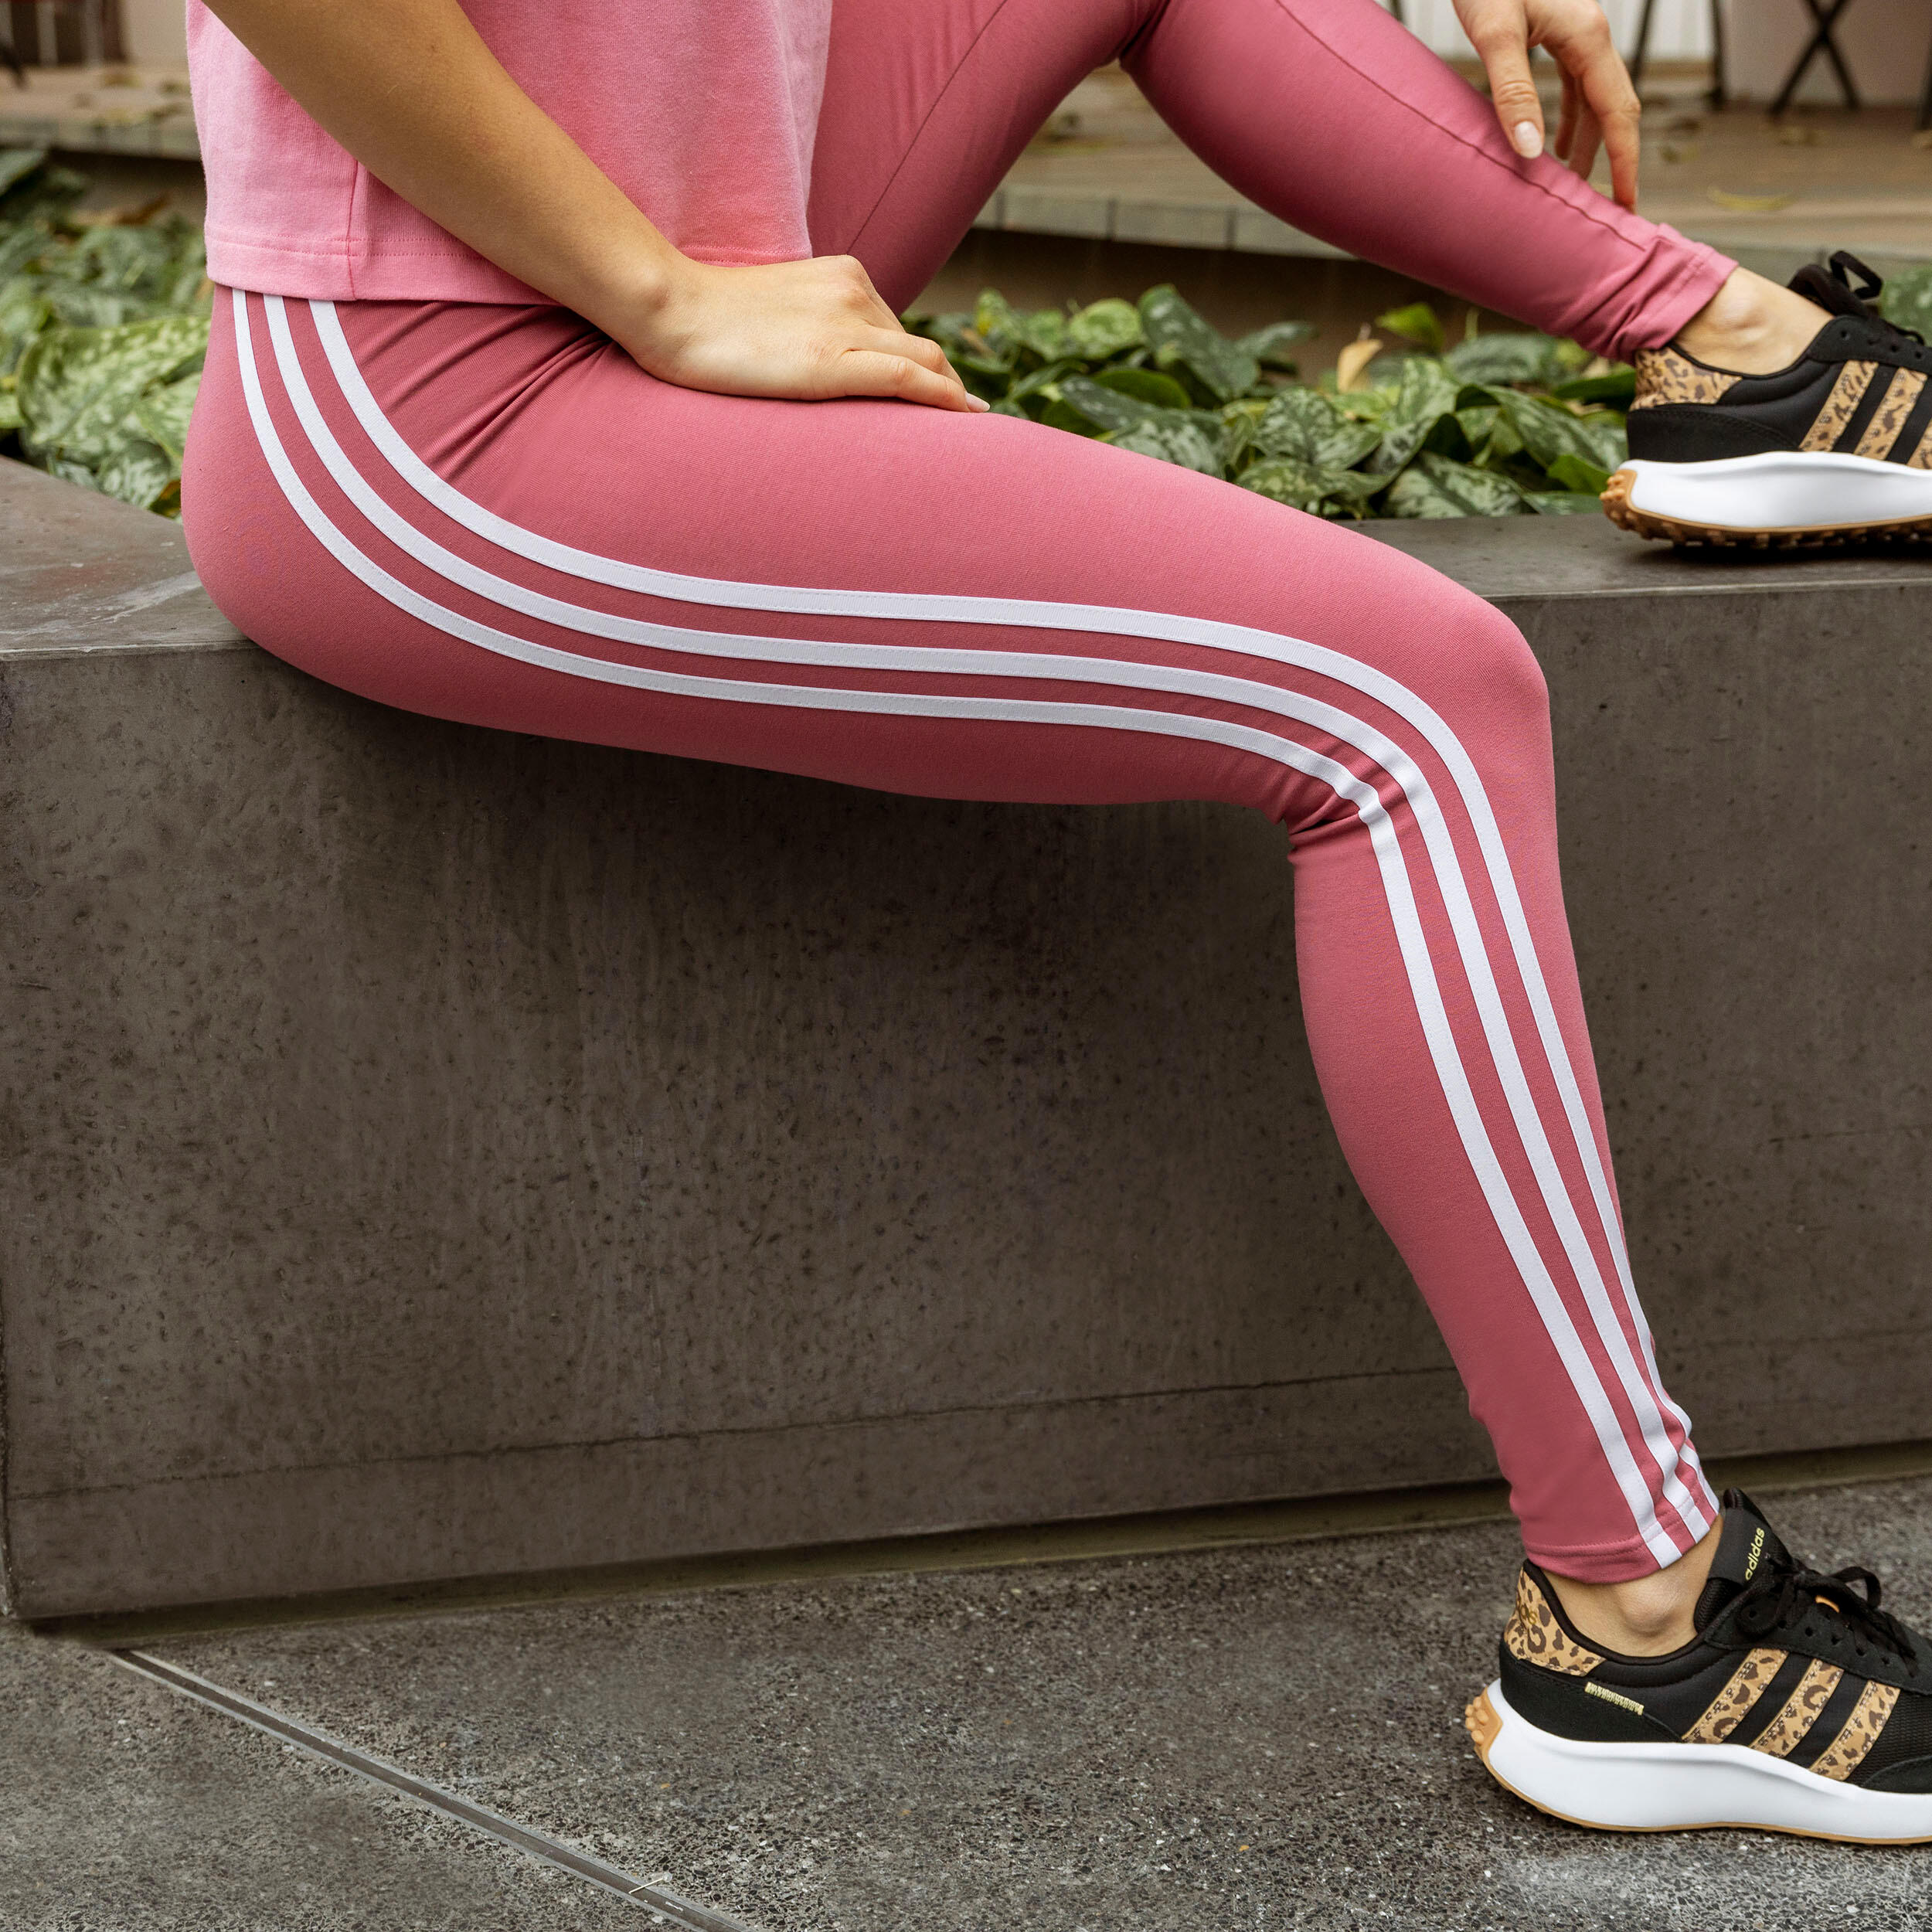 Colanți Fitness Adidas Icons Roz Damă adidas  Imbracaminte de pilates femei